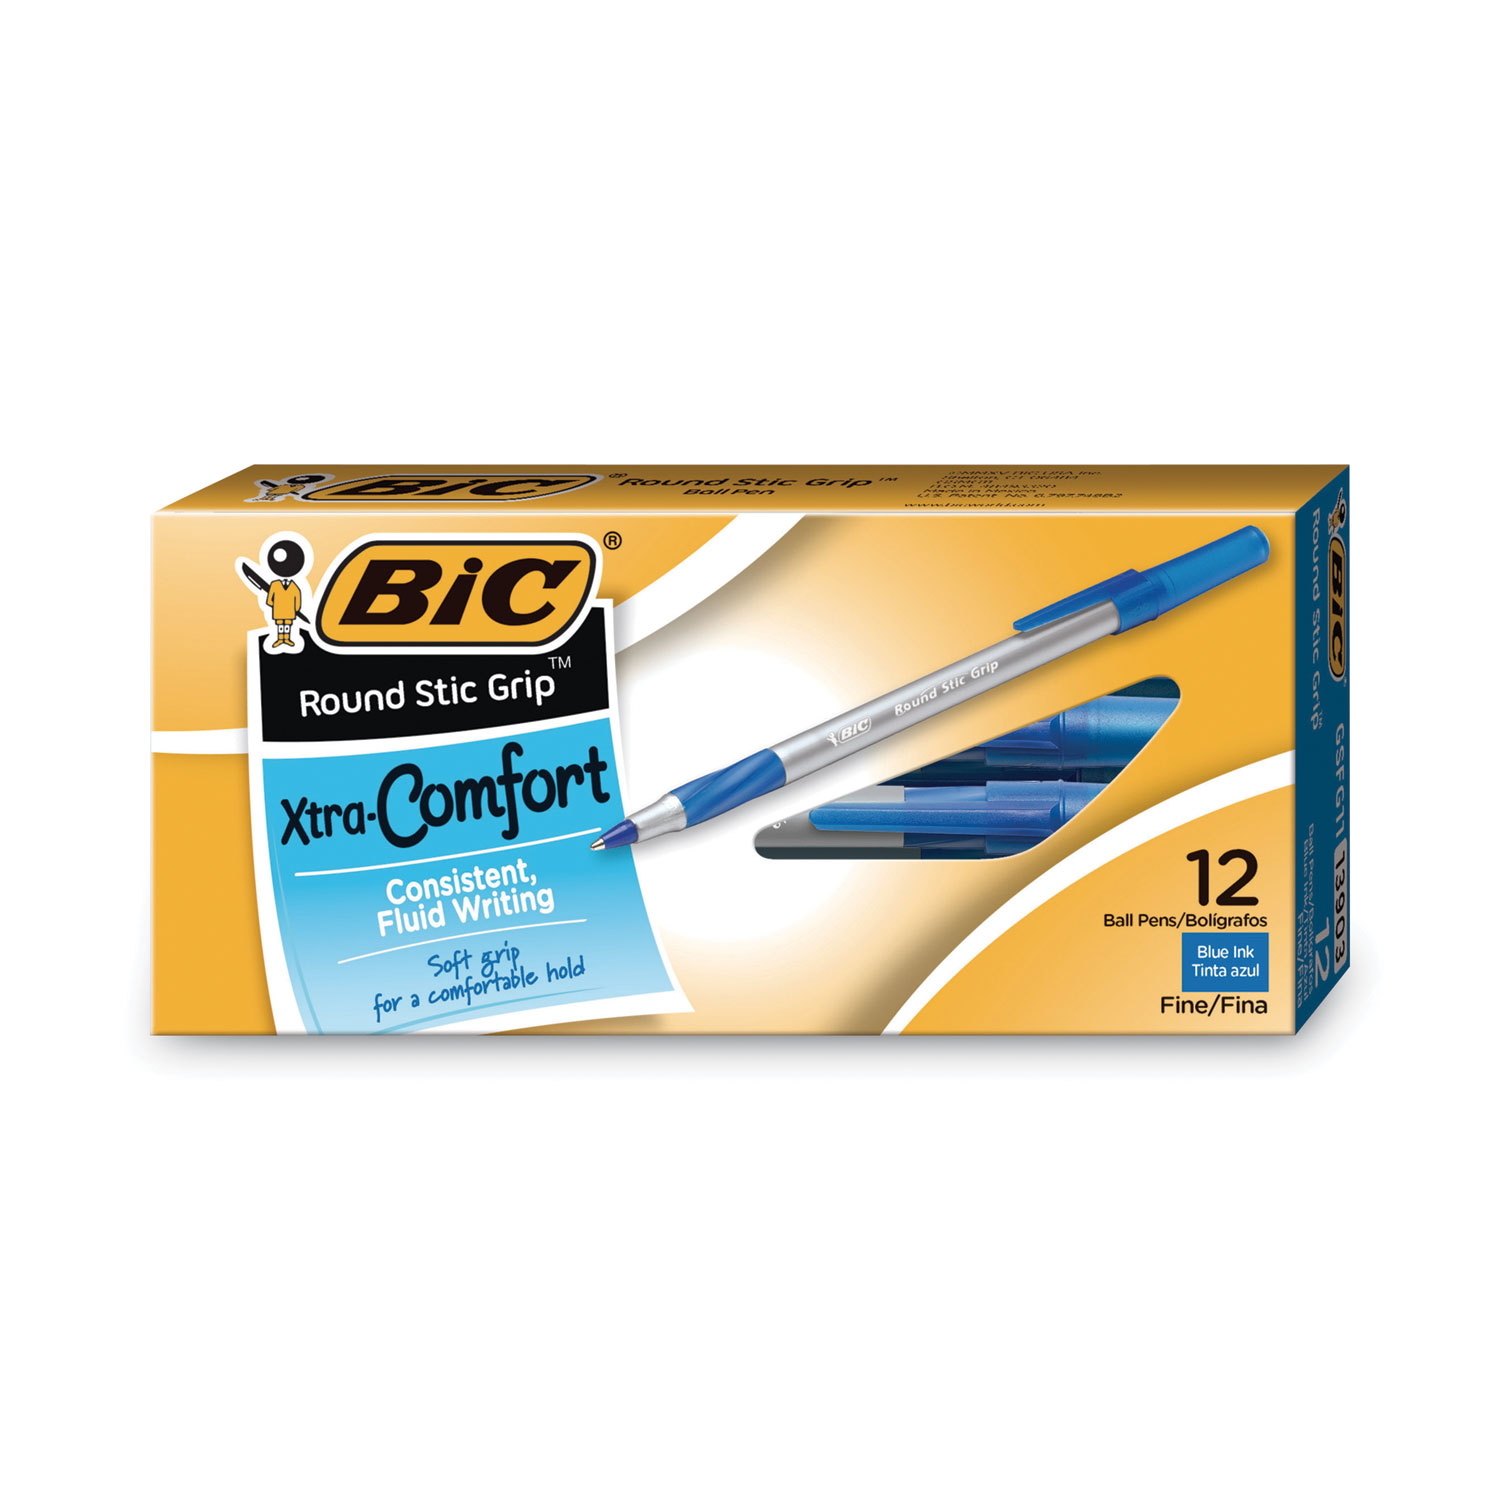 Bic Cristal Soft Ball Pens Medium Point (1.2 mm) - Blue, Box of 50